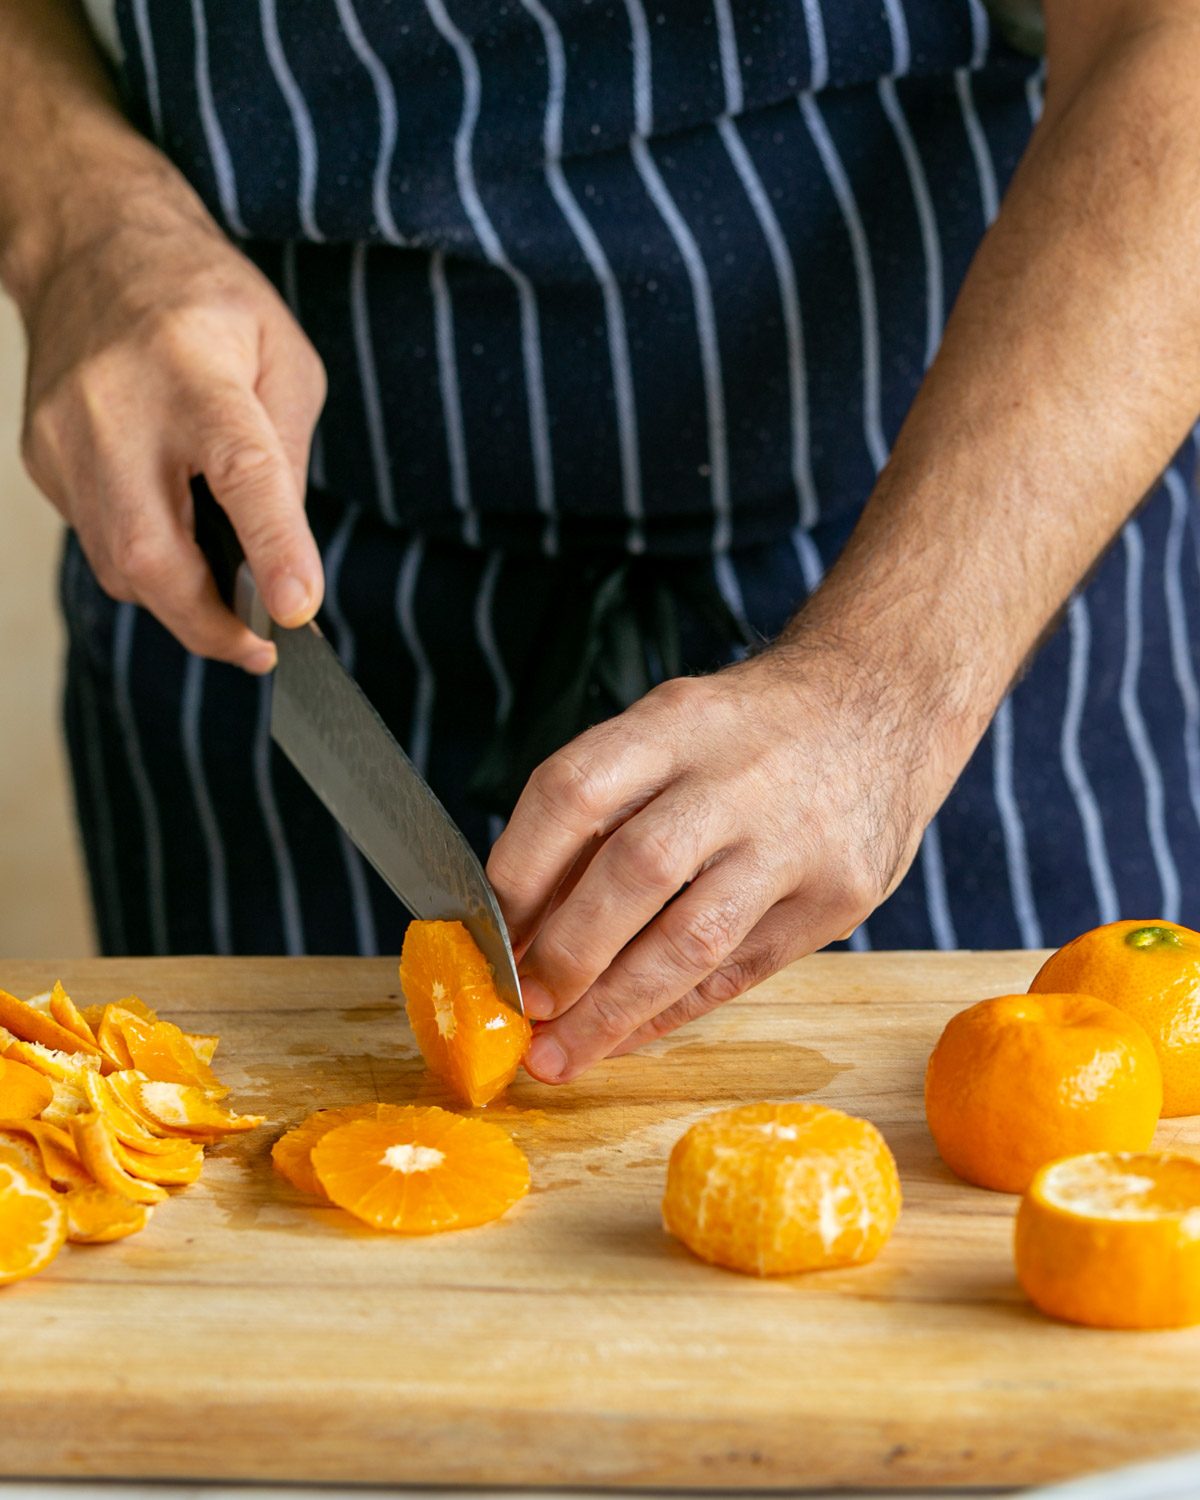 Sliced mandarins to be used as garnish